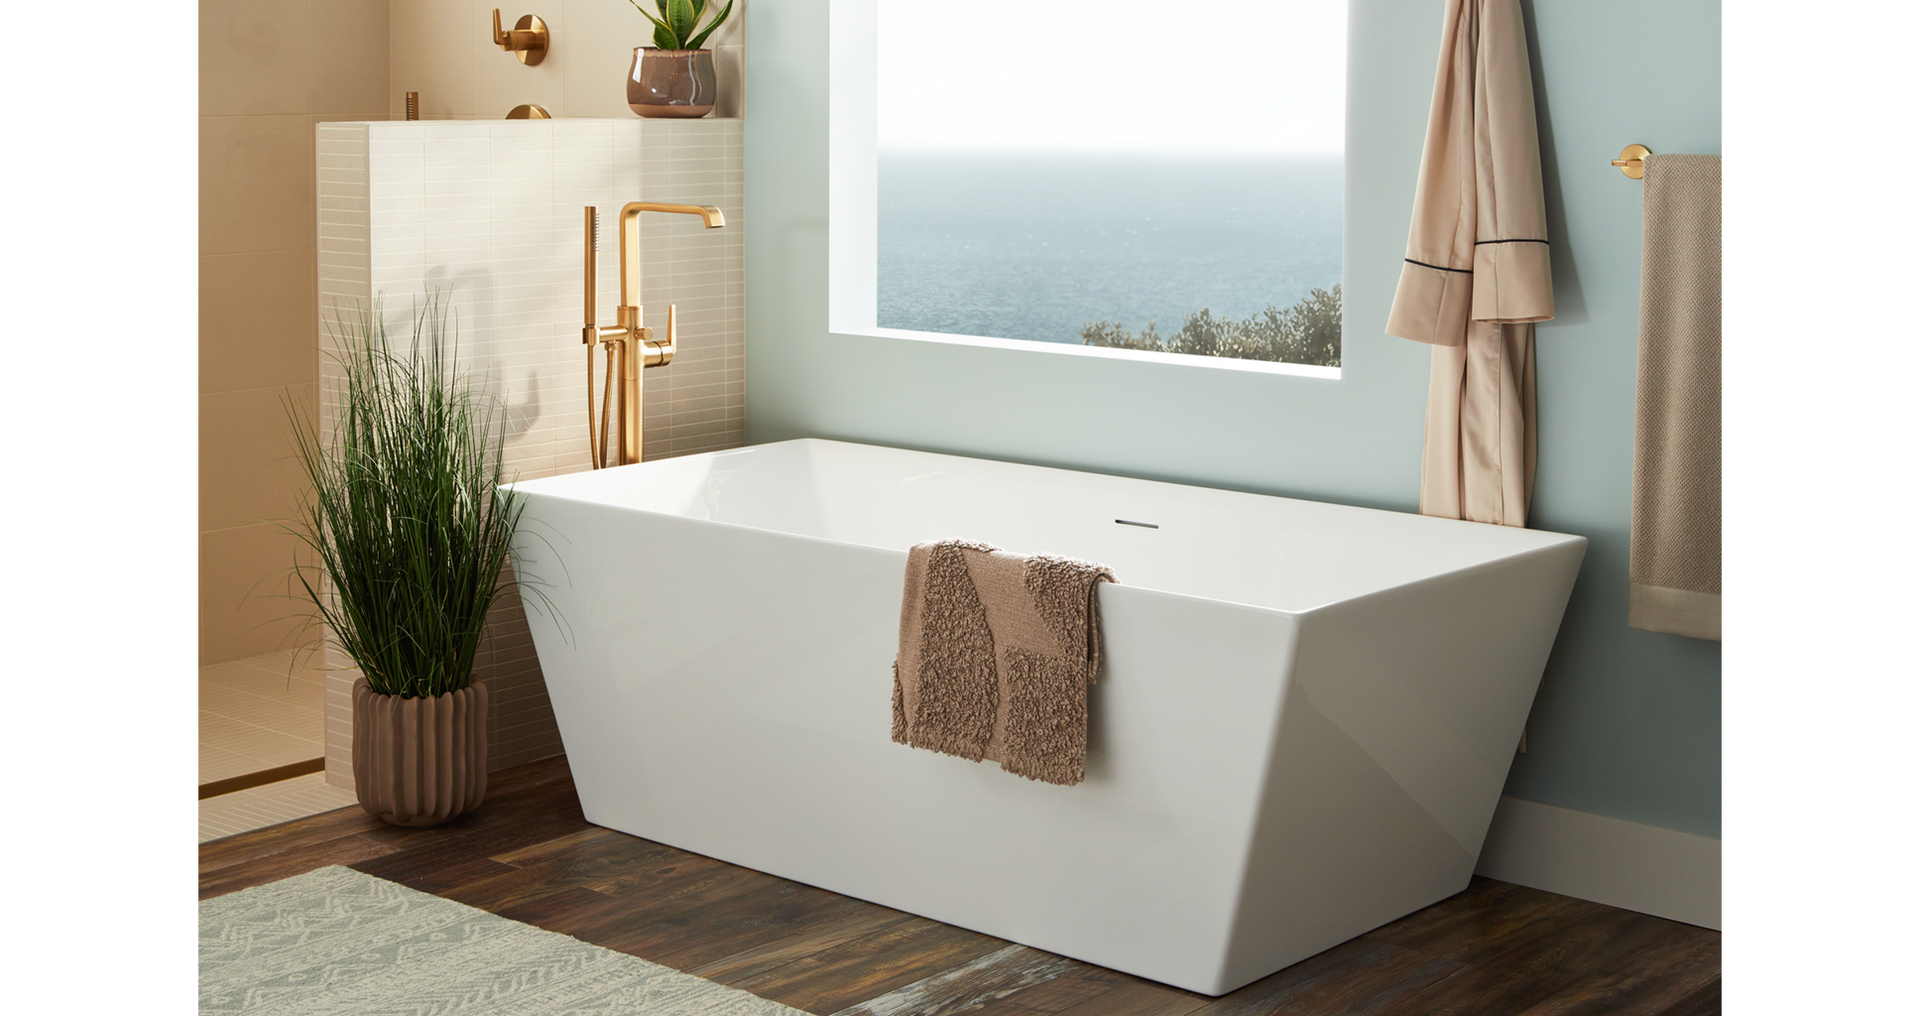 67" Hibiscus Rectangular Acrylic Freestanding Tub, Drea Freestanding Tub Faucet in Brushed Gold